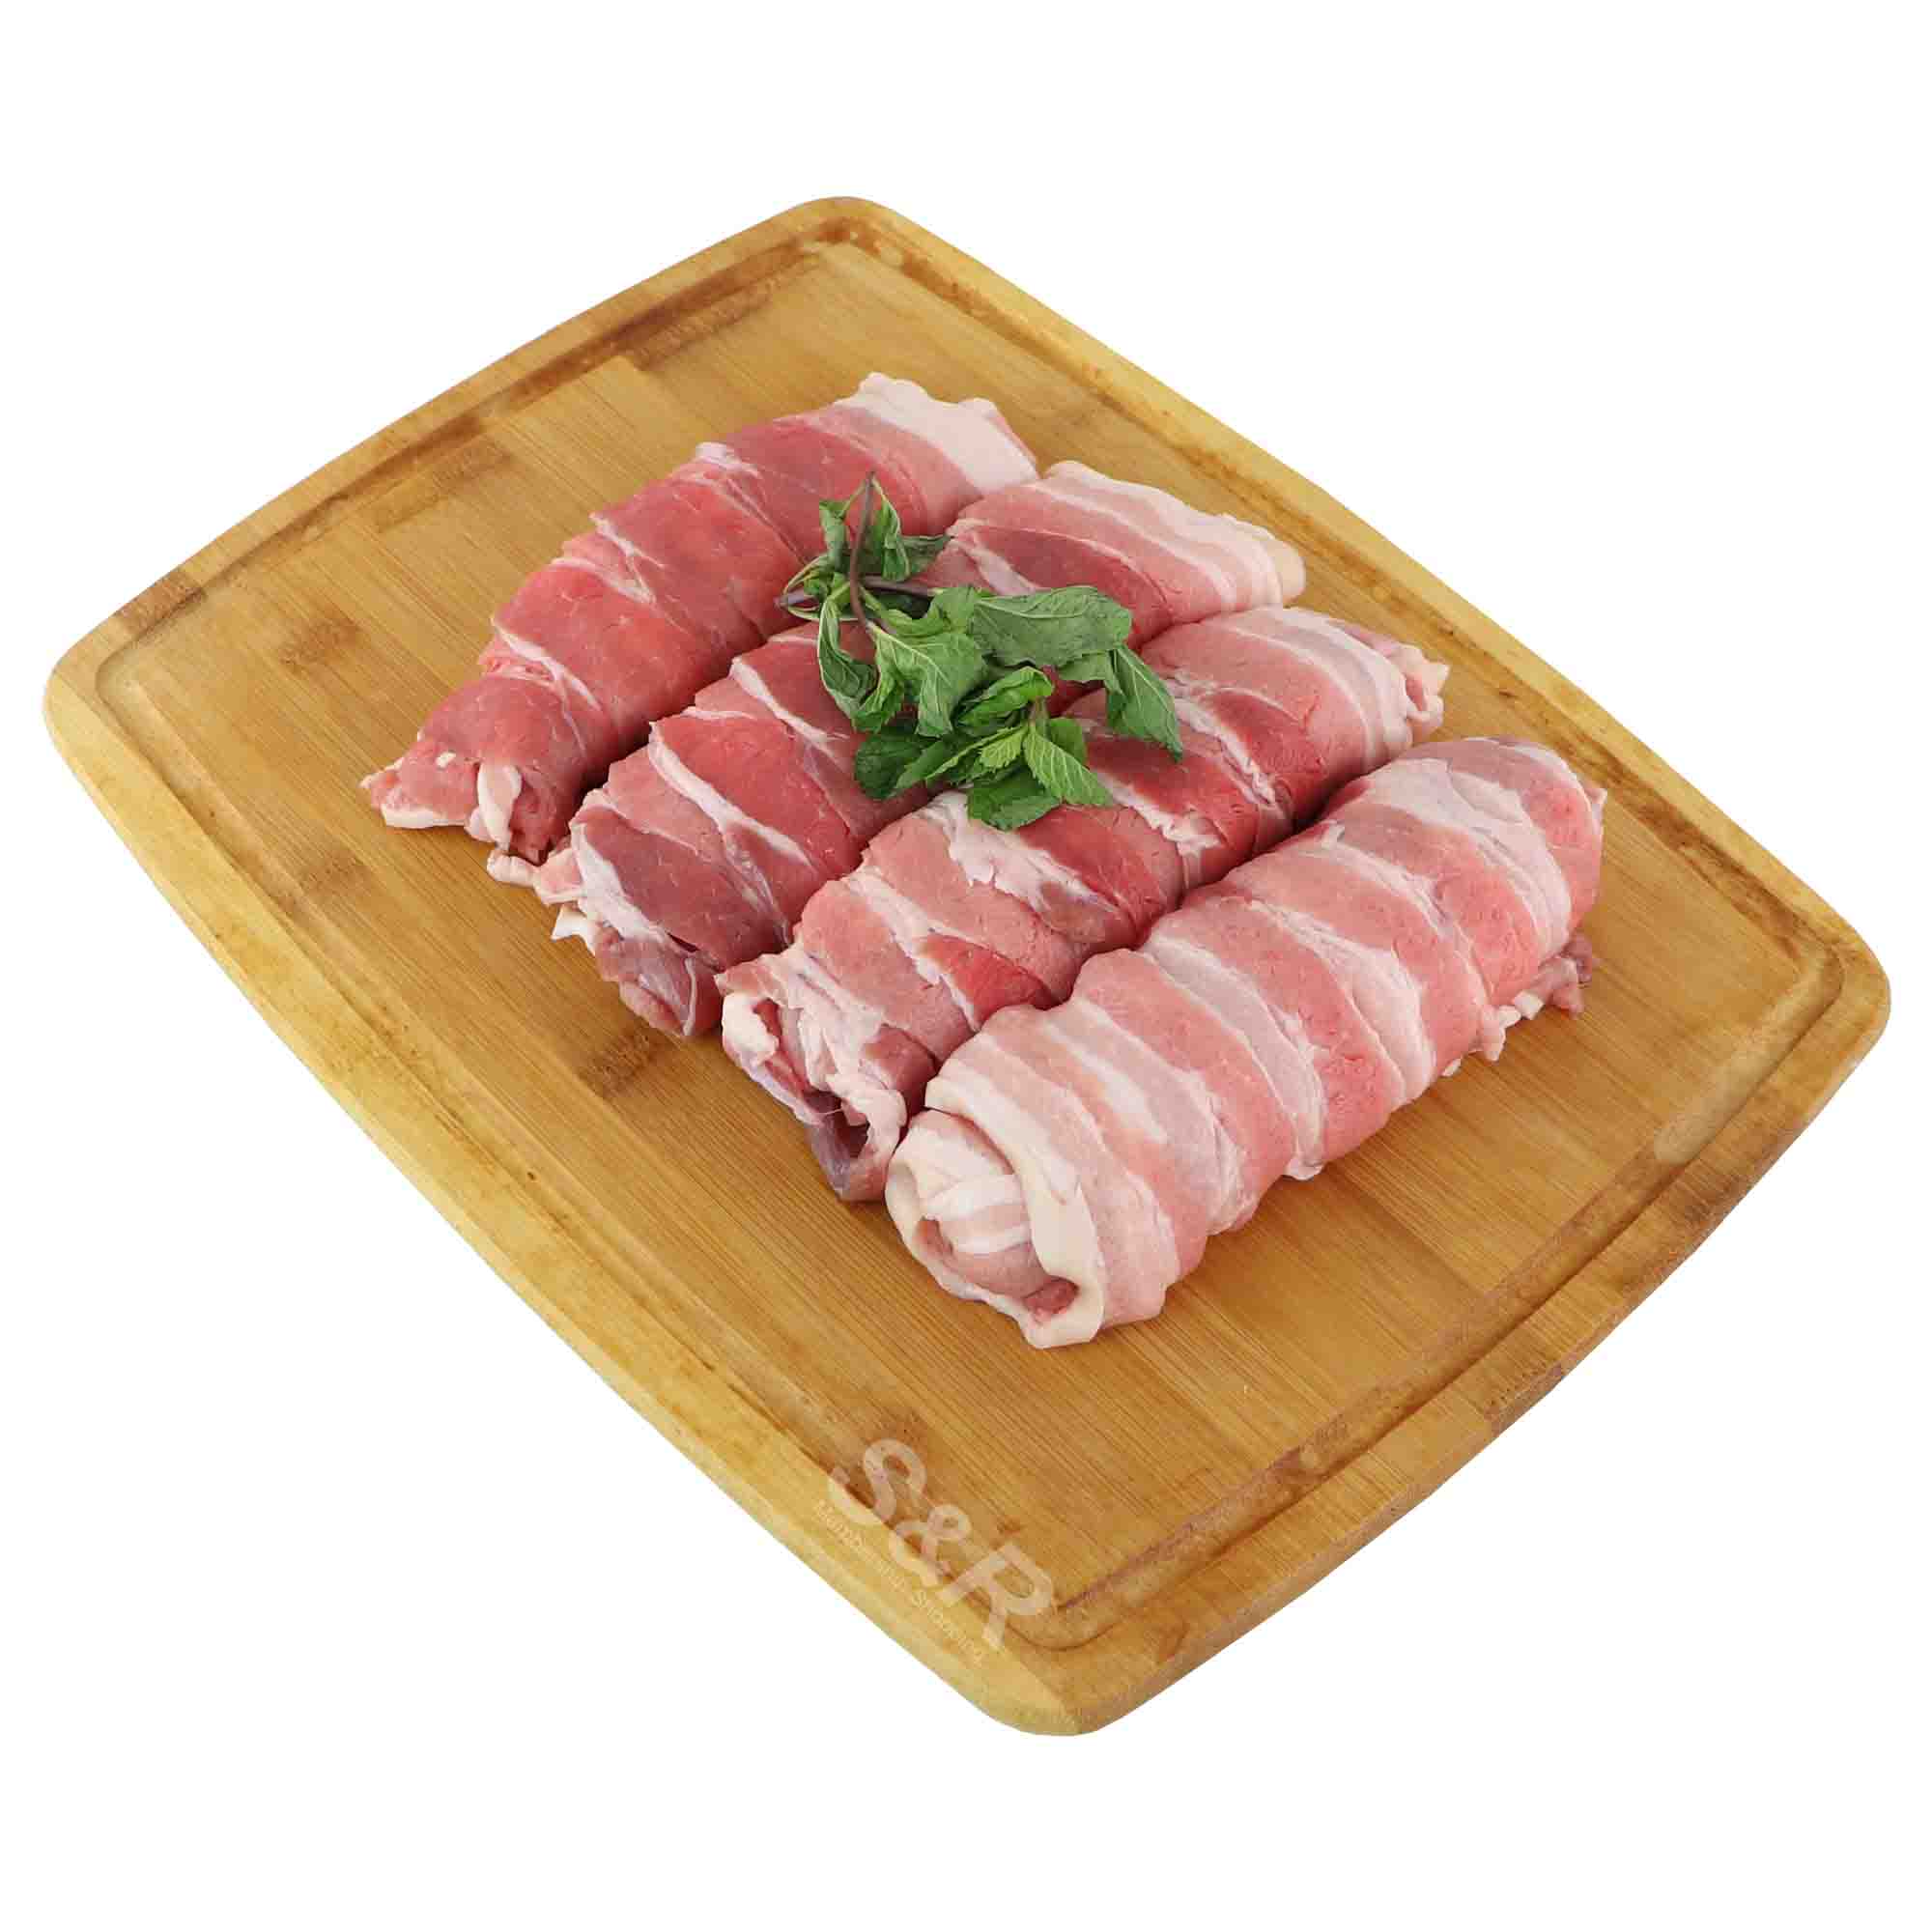 Members' Value Pork Sliced Bacon approx. 1.7kg